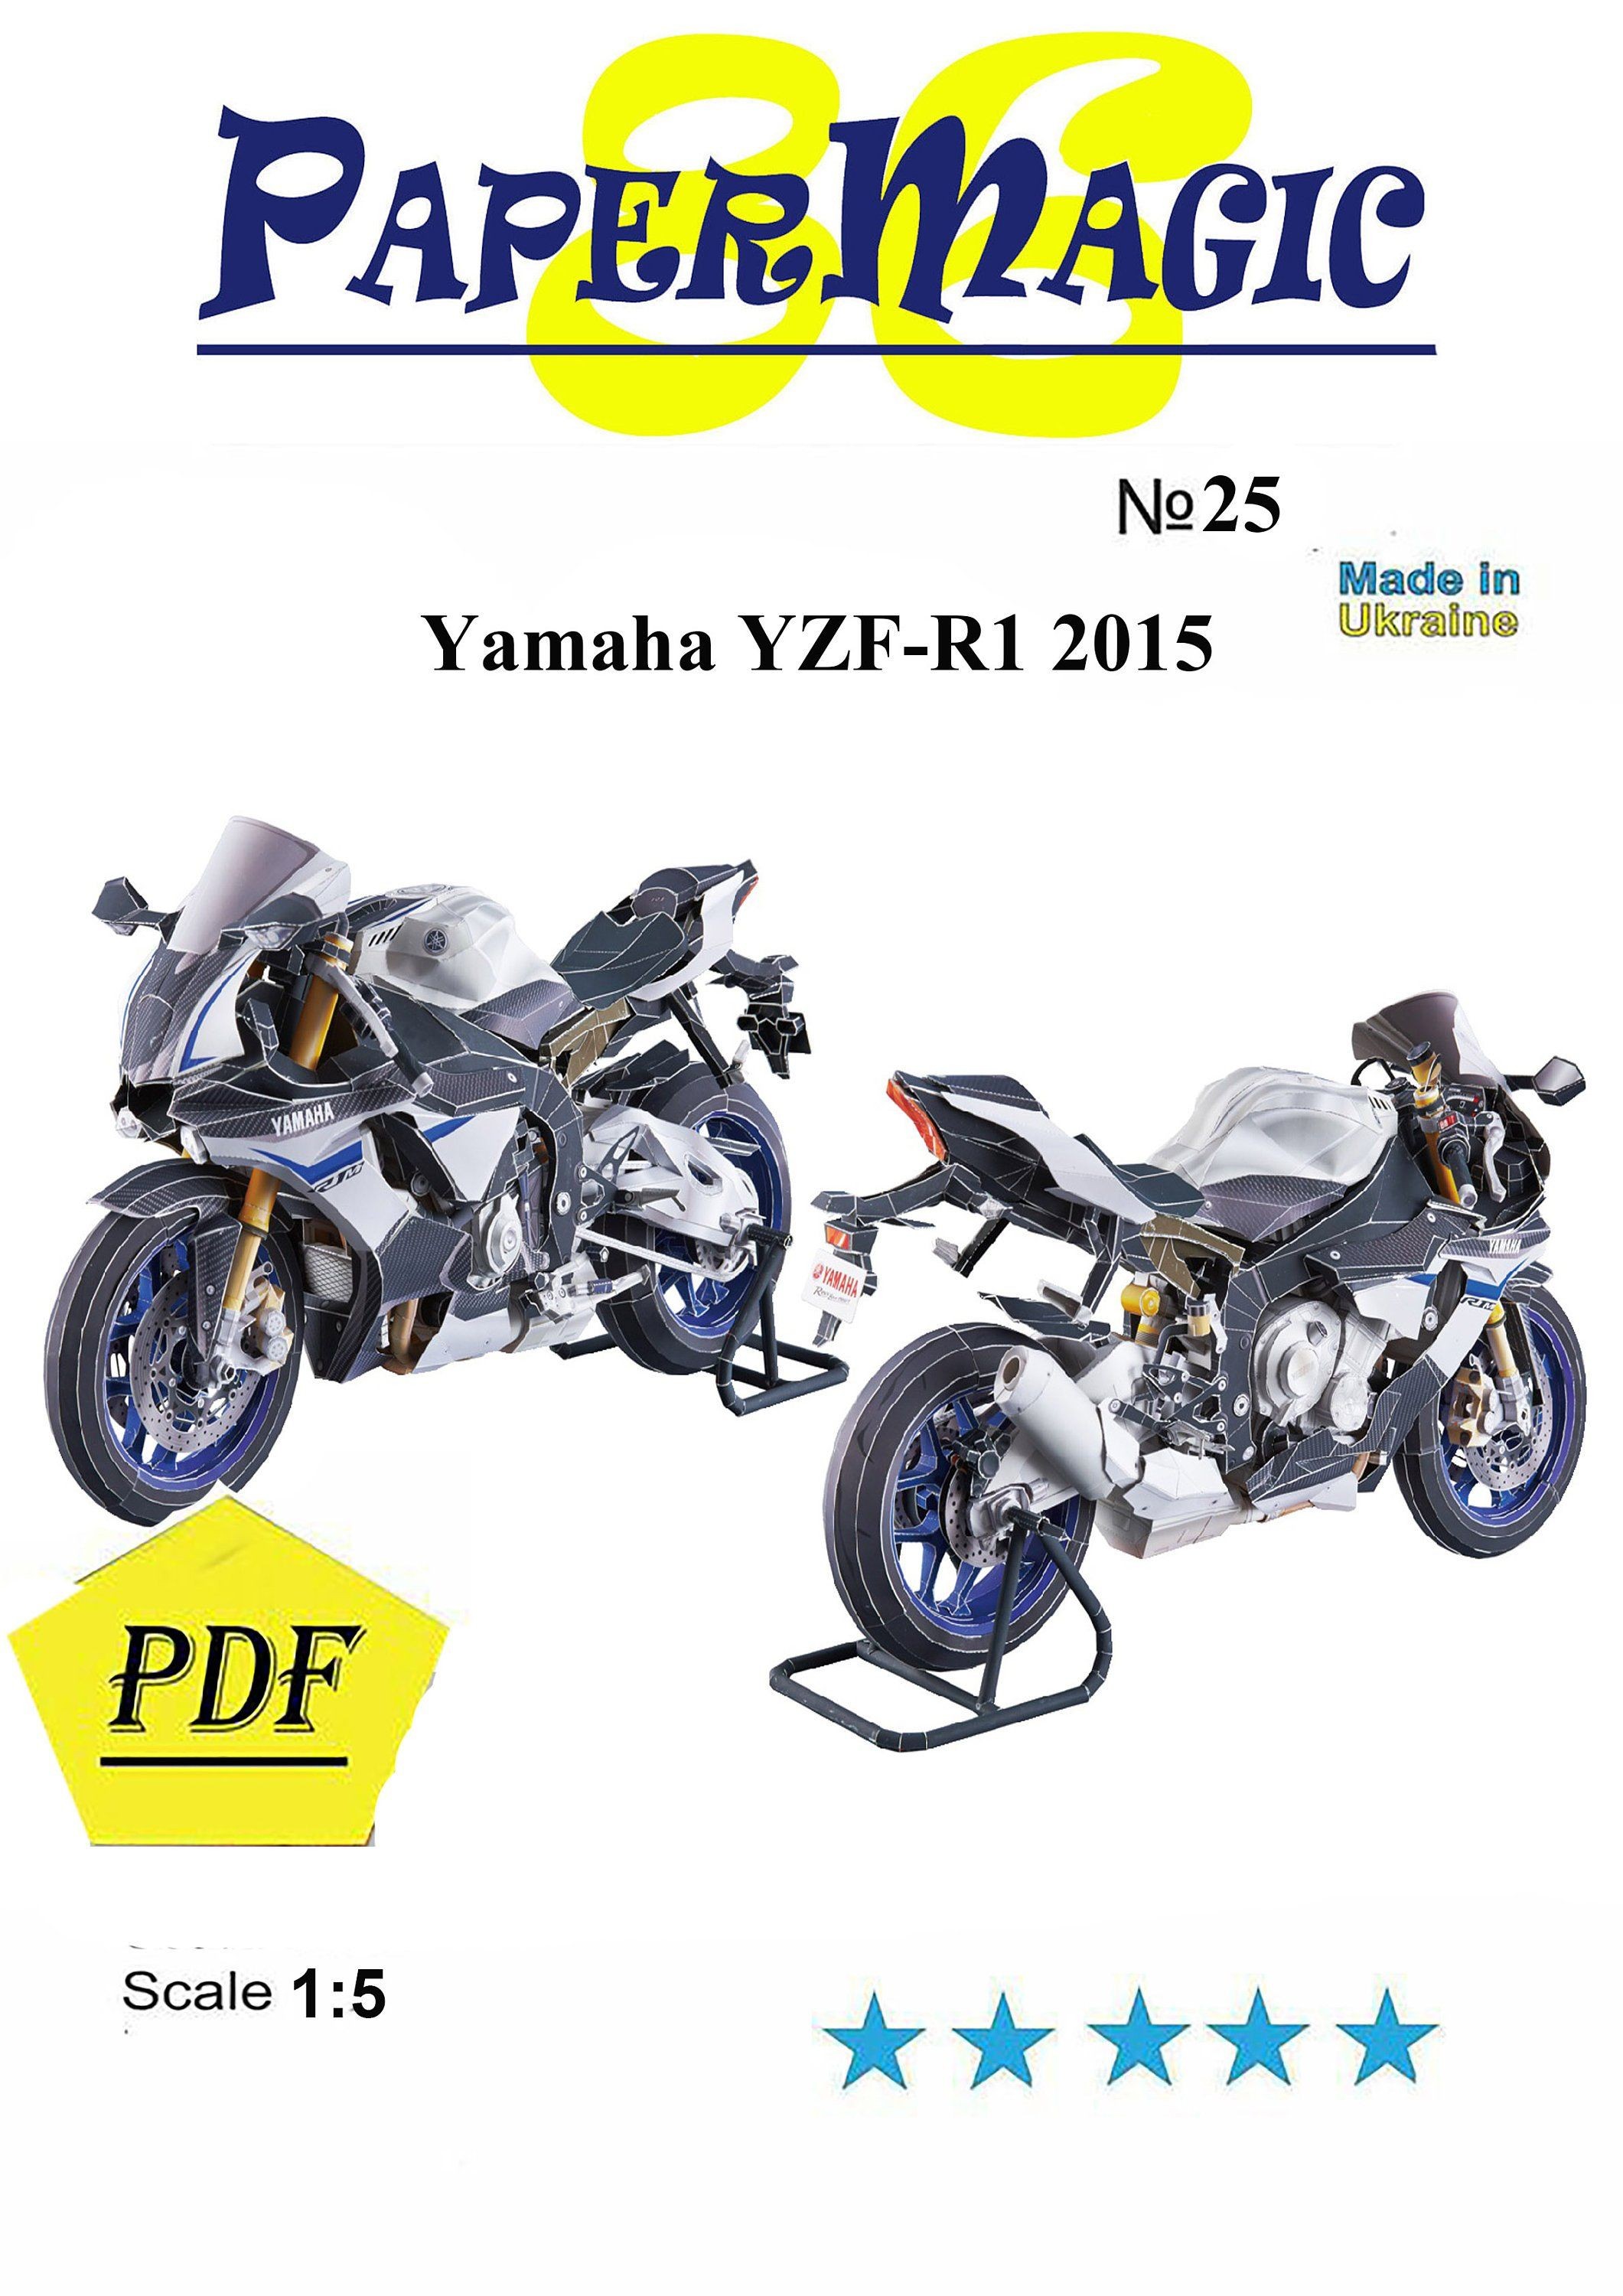 Printable Yamaha Papercraft Motorcycle